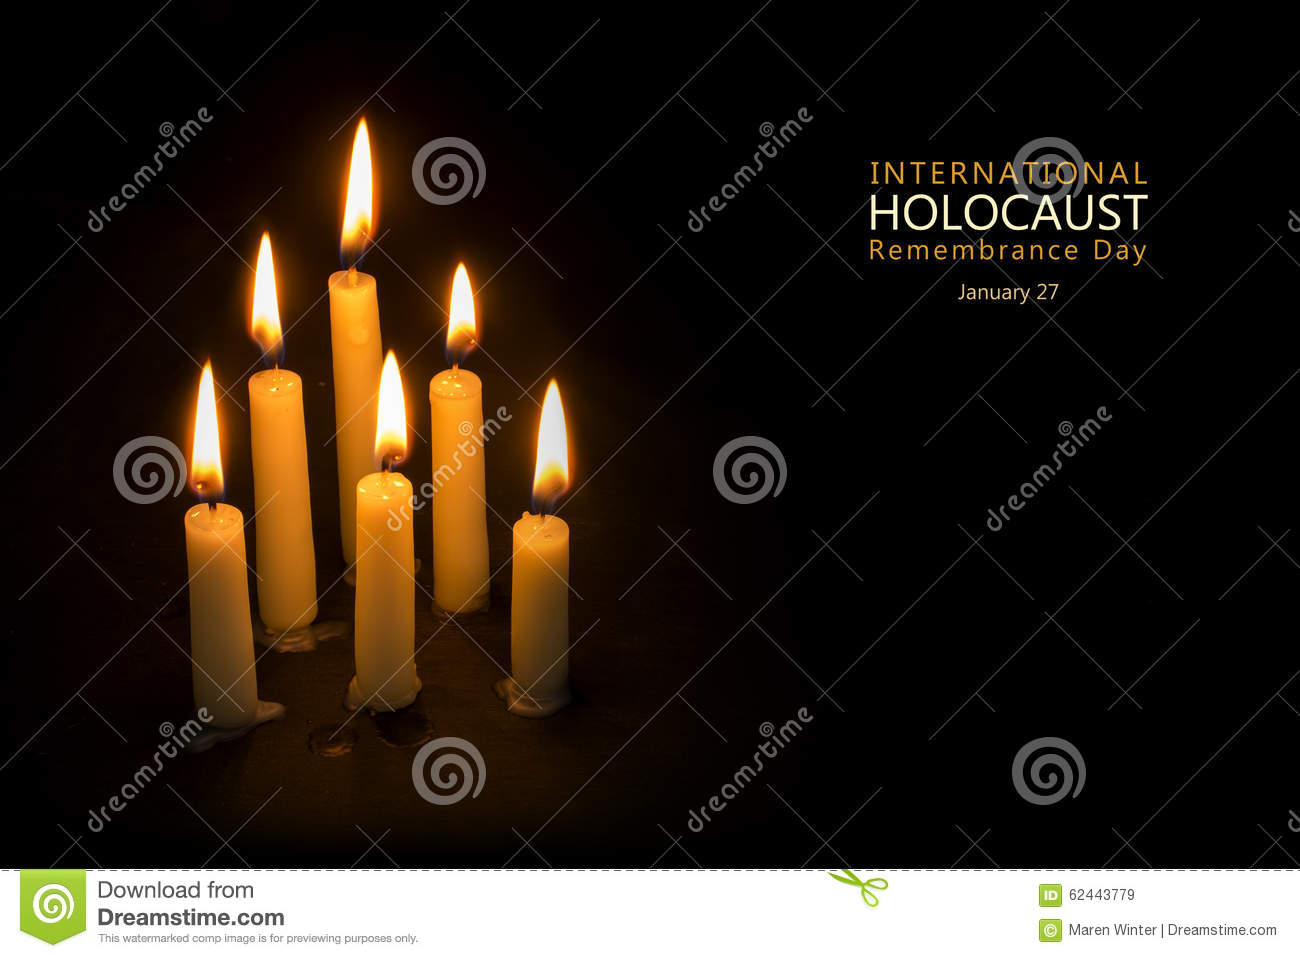 Six Burning Candles On Black Background International Holocaust Remembrance Day January 27